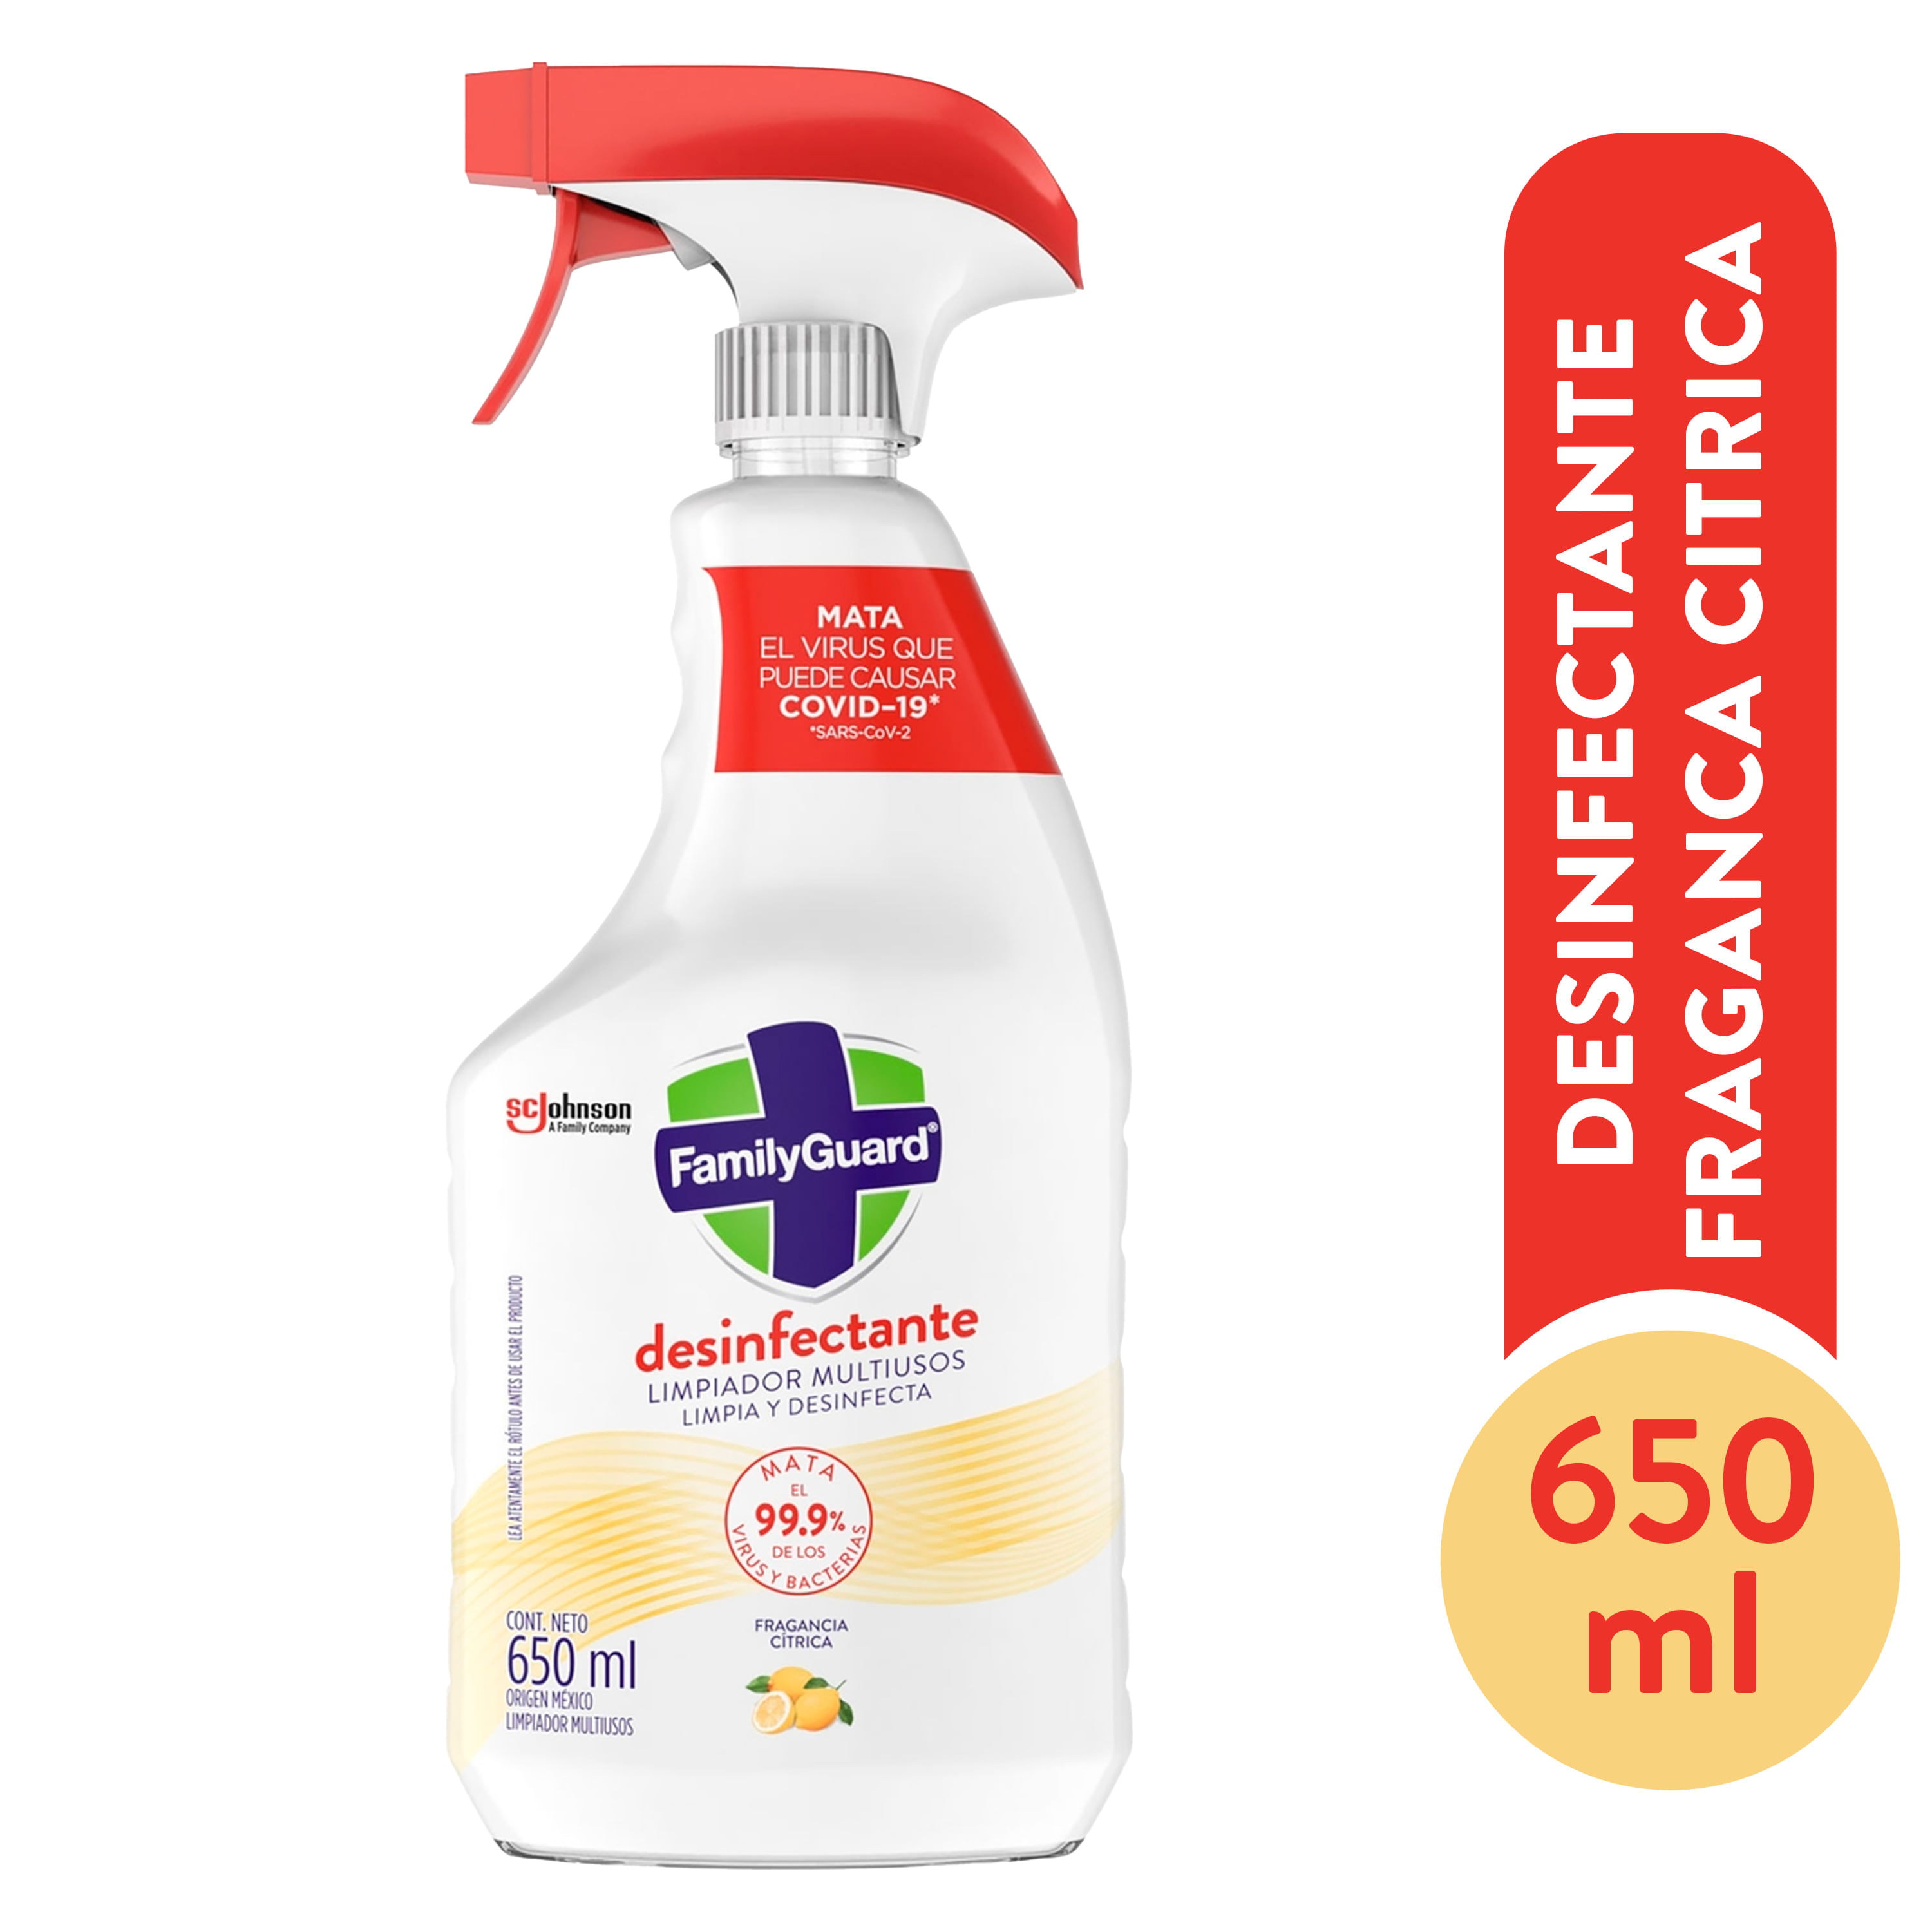 Desinfectante-Limpiador-Family-Guard-Citrus-Multisuperficies-650ml-1-8973